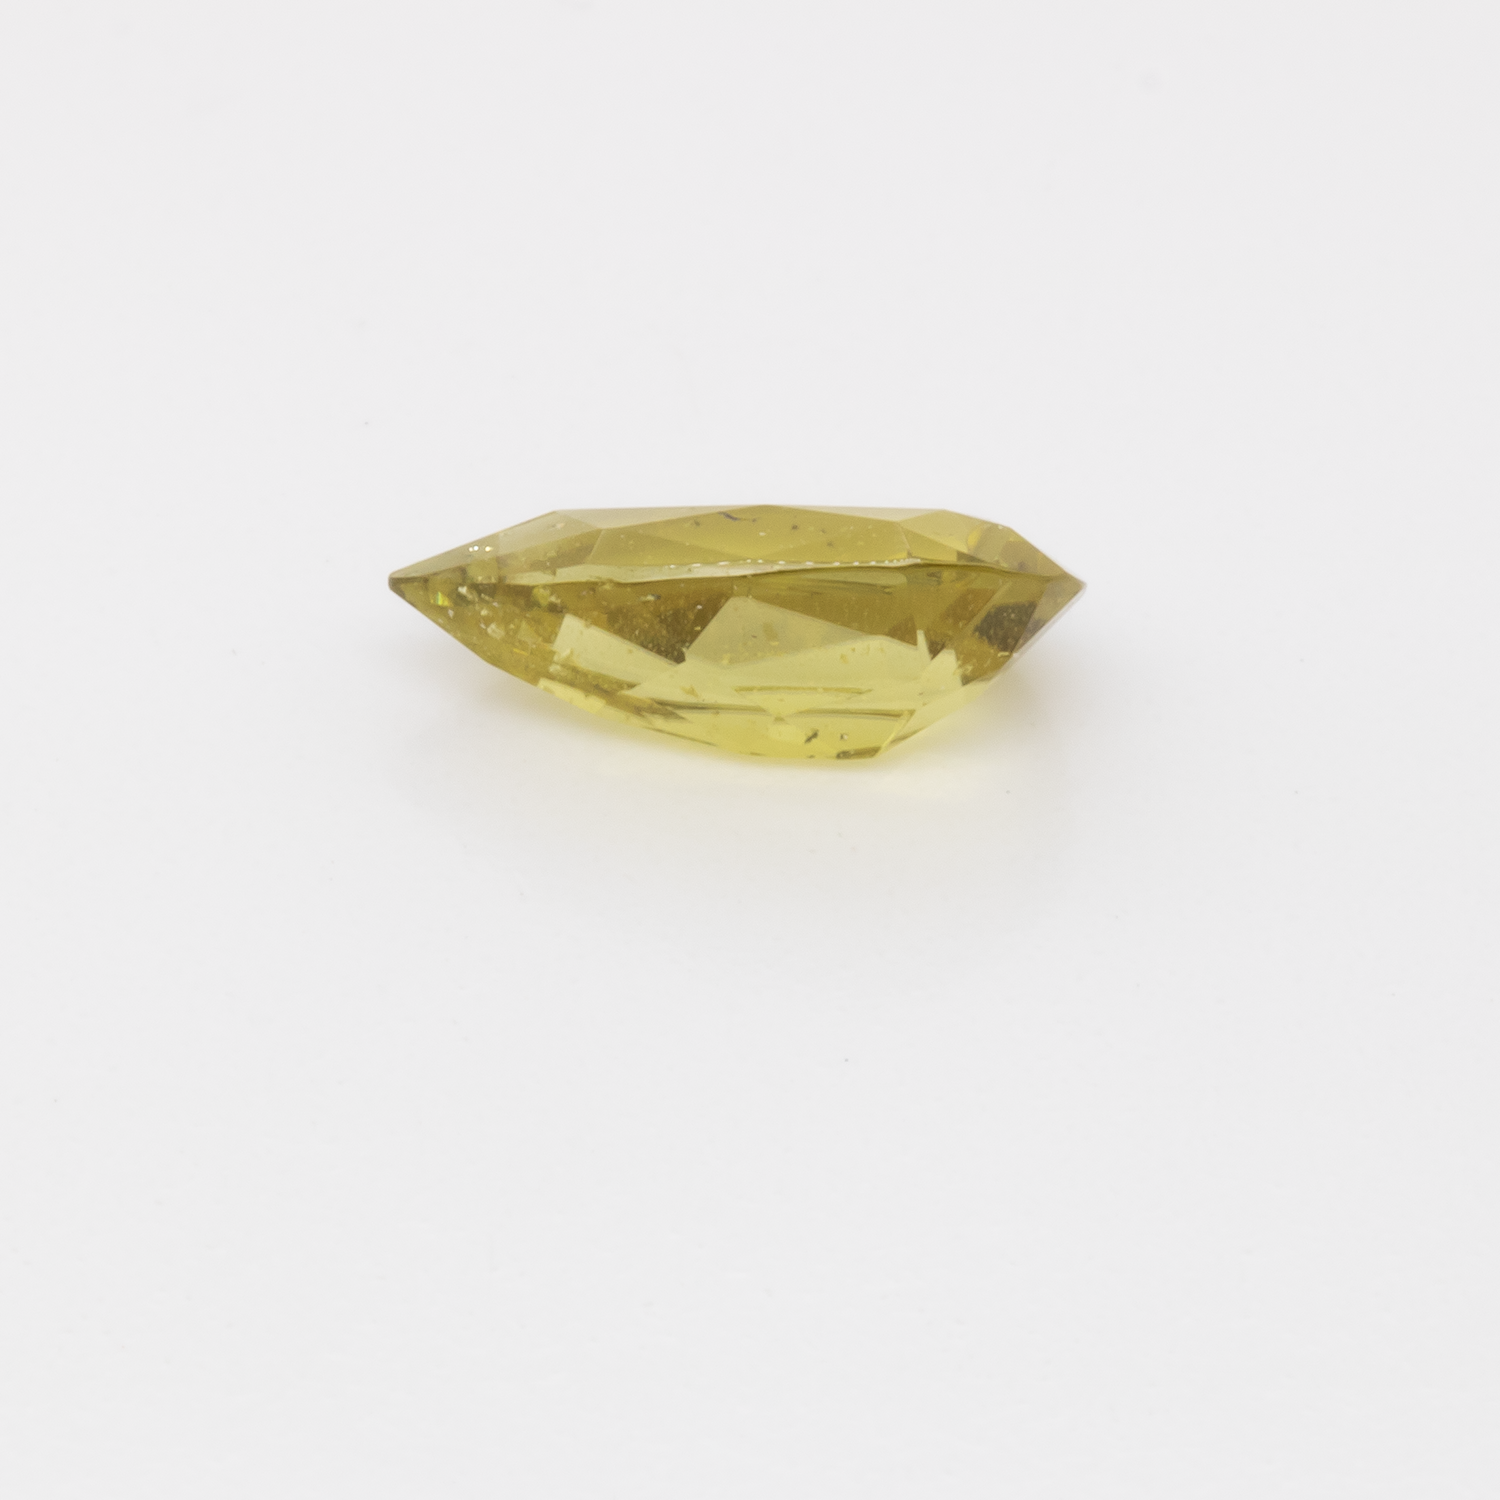 Tourmaline - yellow, pearshape, 8.7x4.9 mm, 0.78 cts, No. TR101331